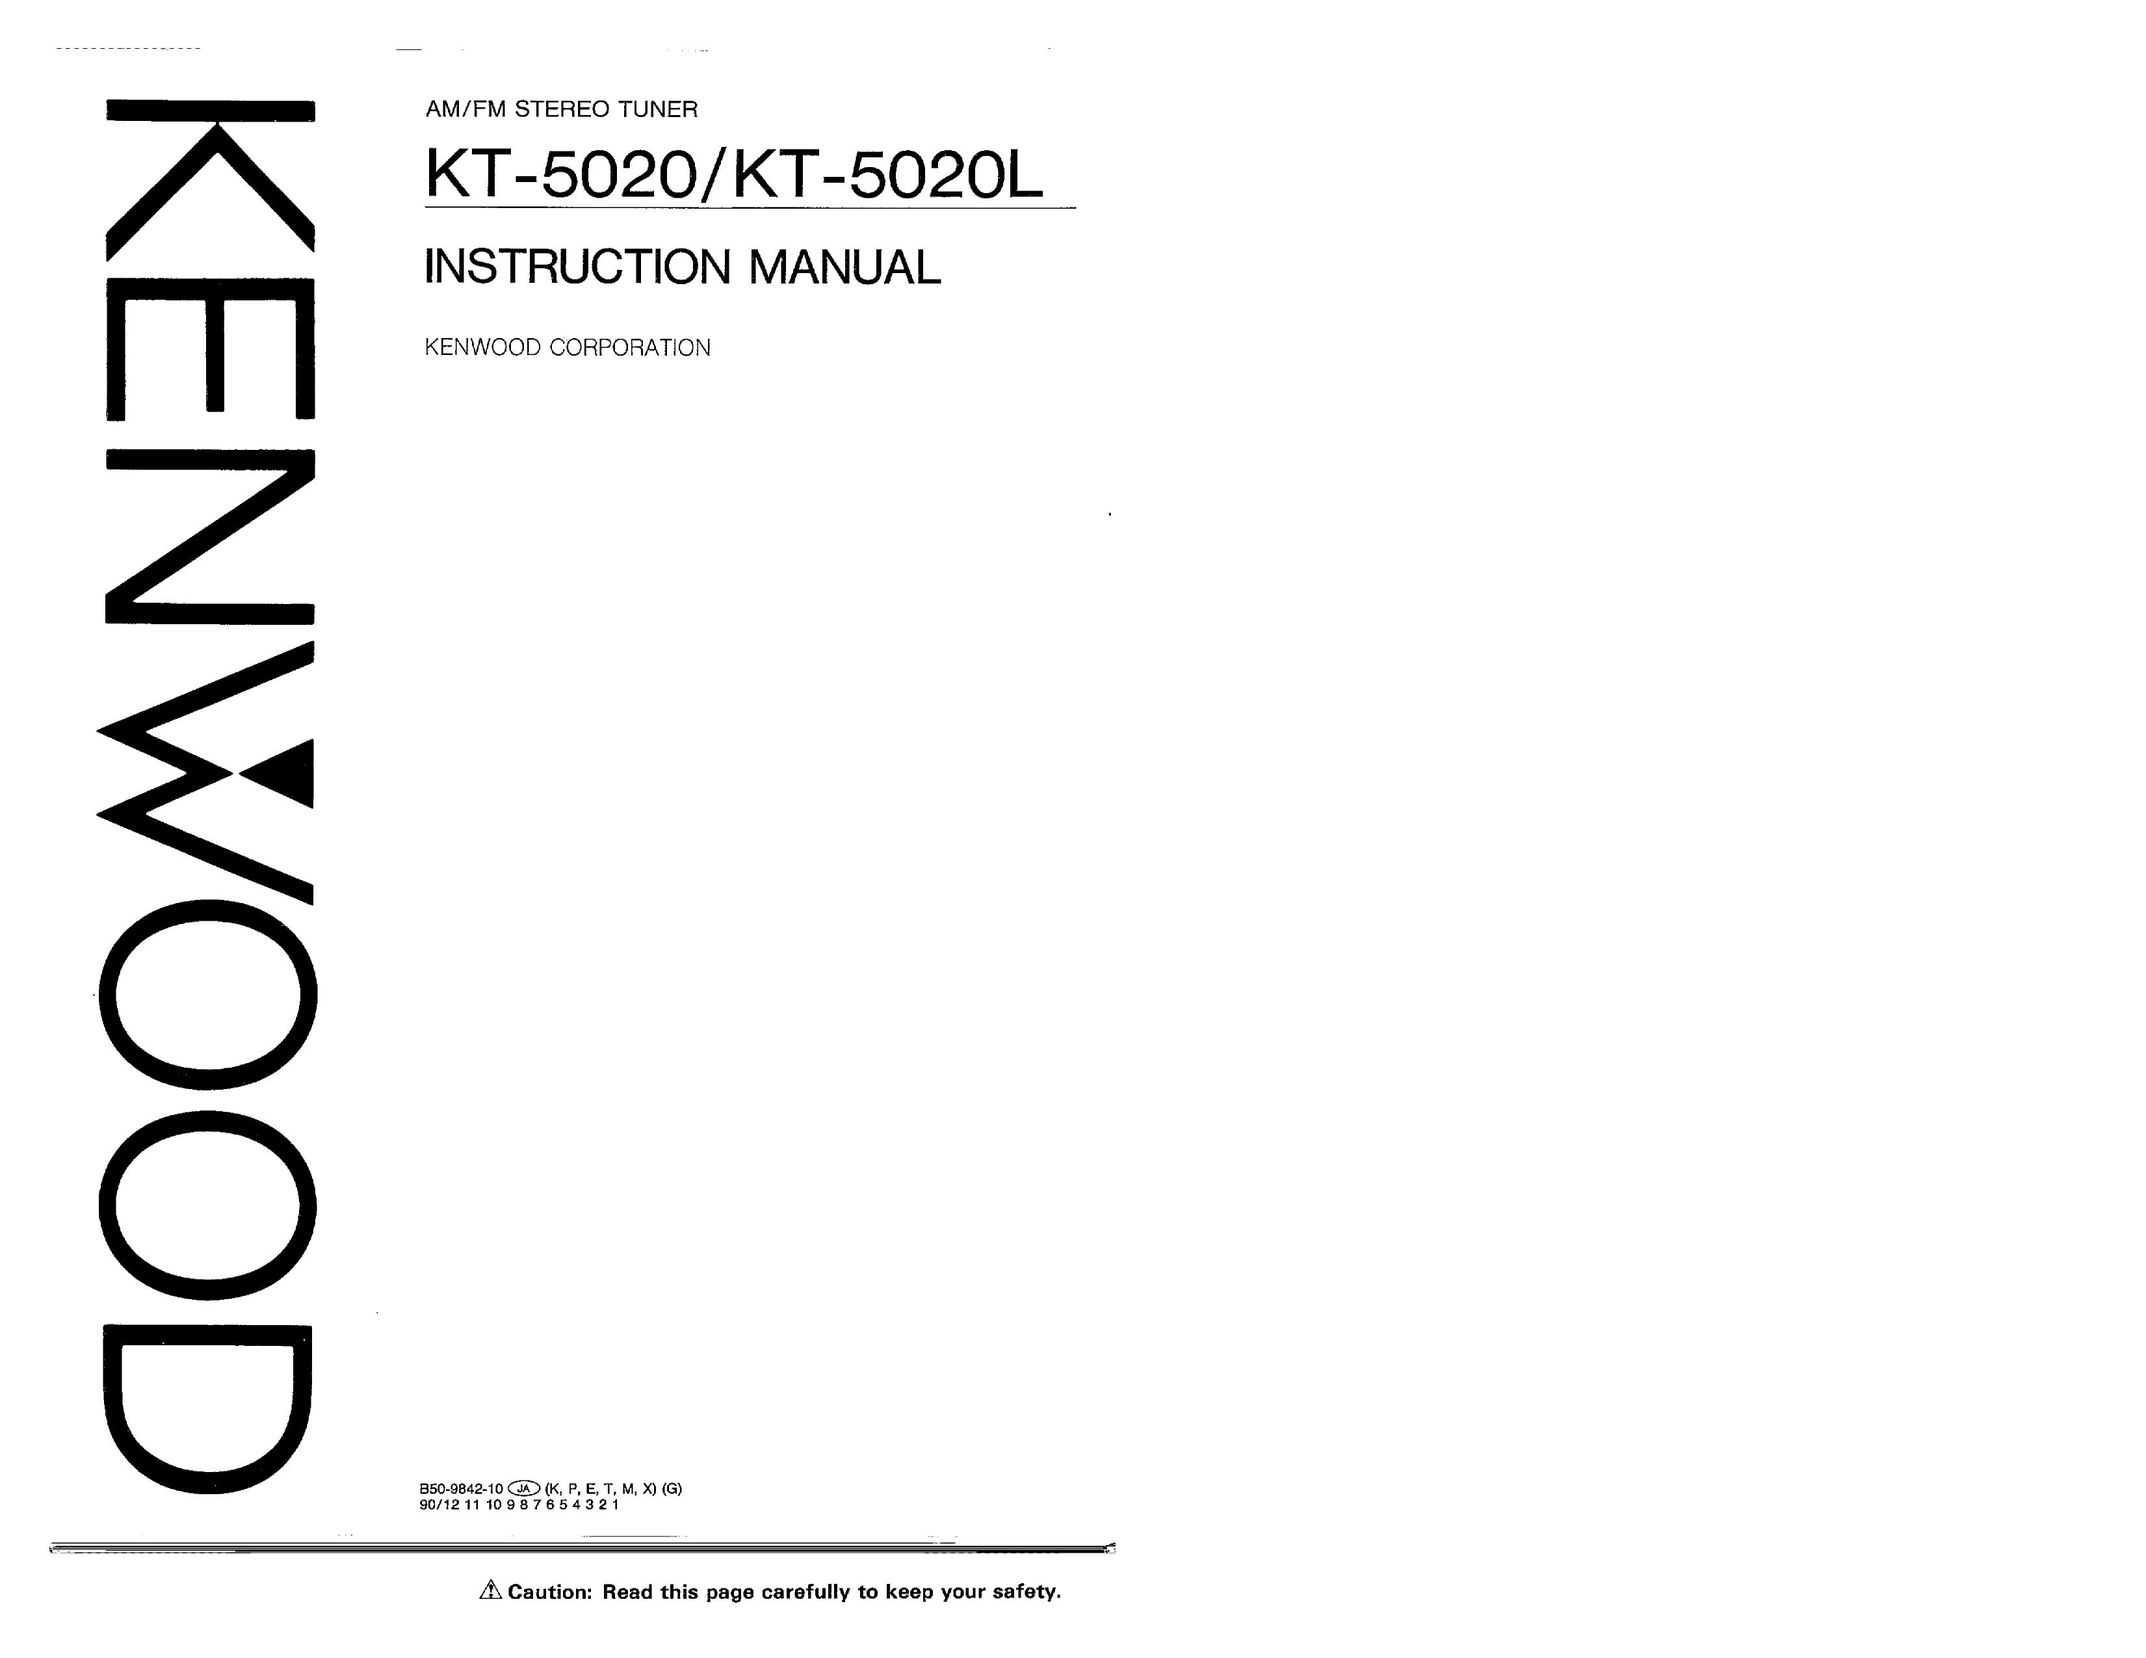 Kenwood KT-5020 Home Security System User Manual